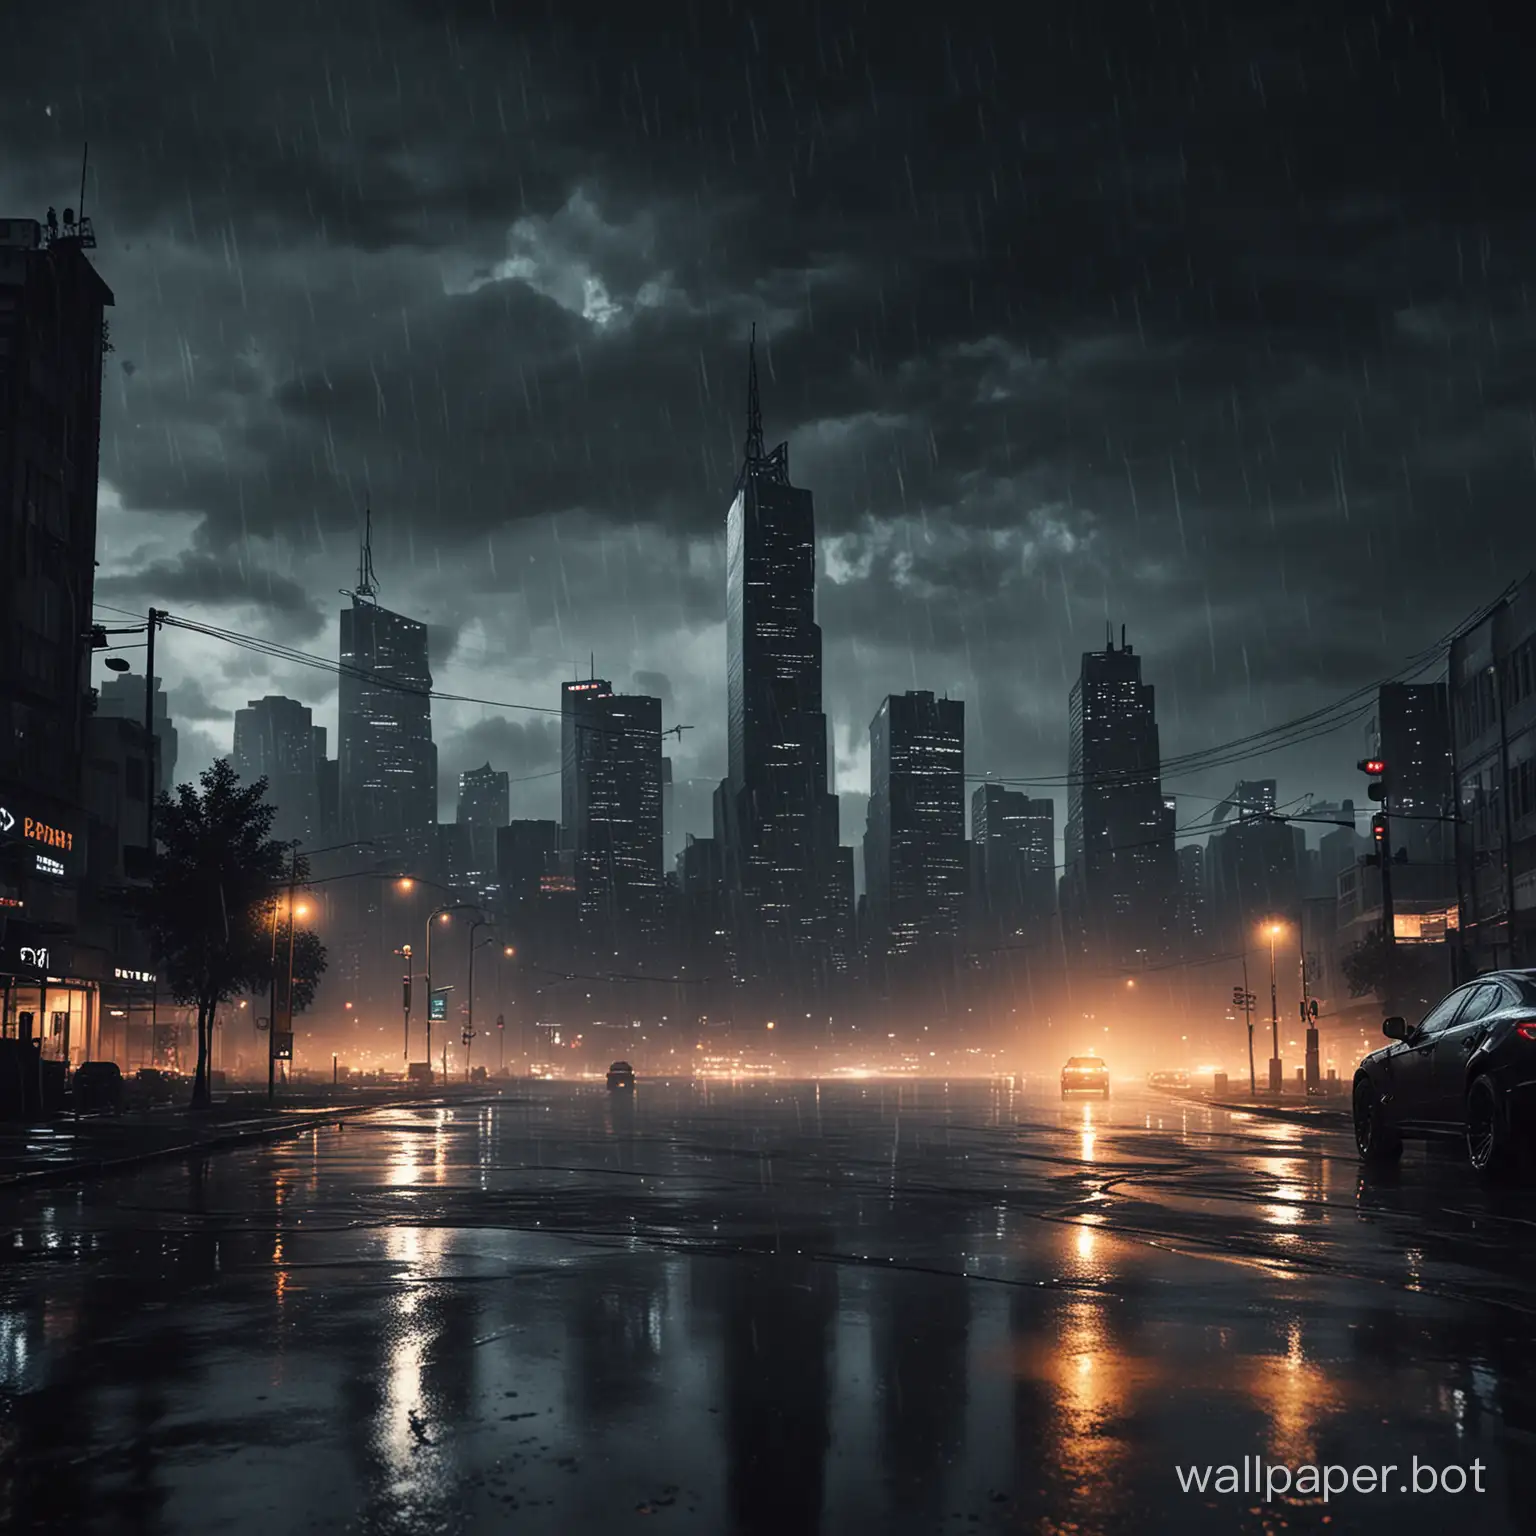 dark wallpaper minimalist, battlefield 4 theme, stormy, raindrops, city background